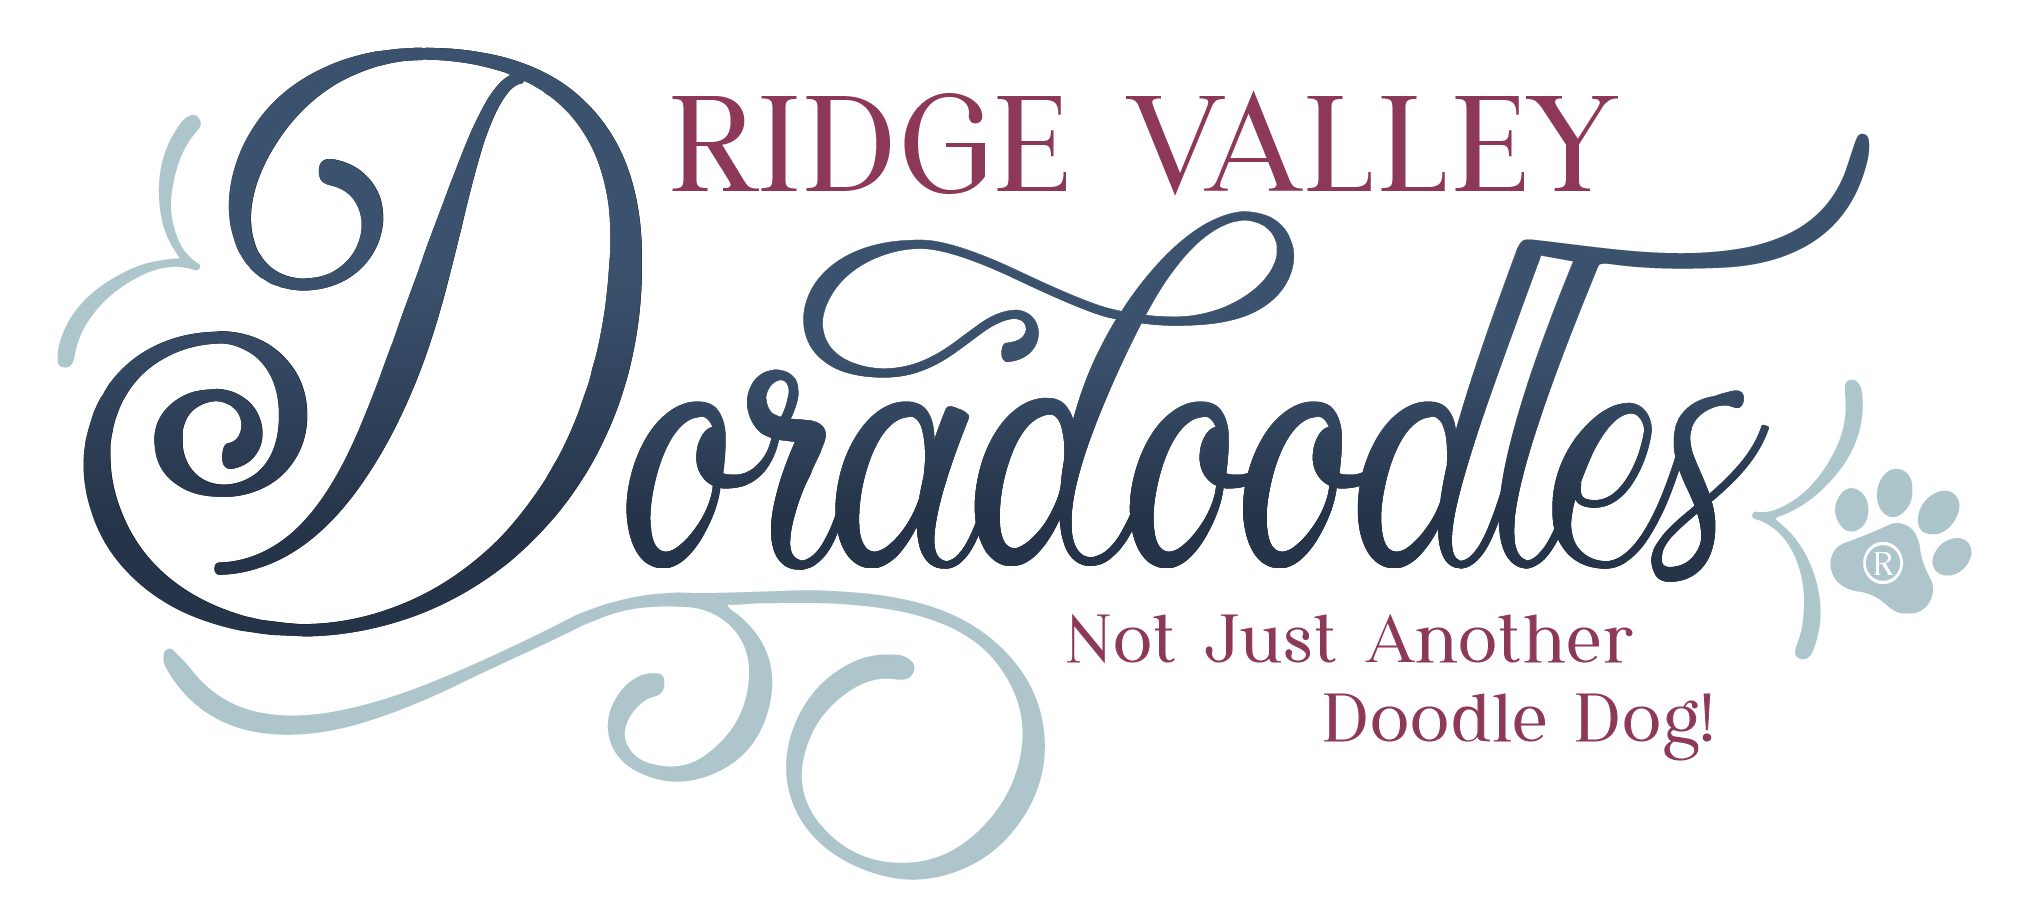 Ridge Valley Doradoodles